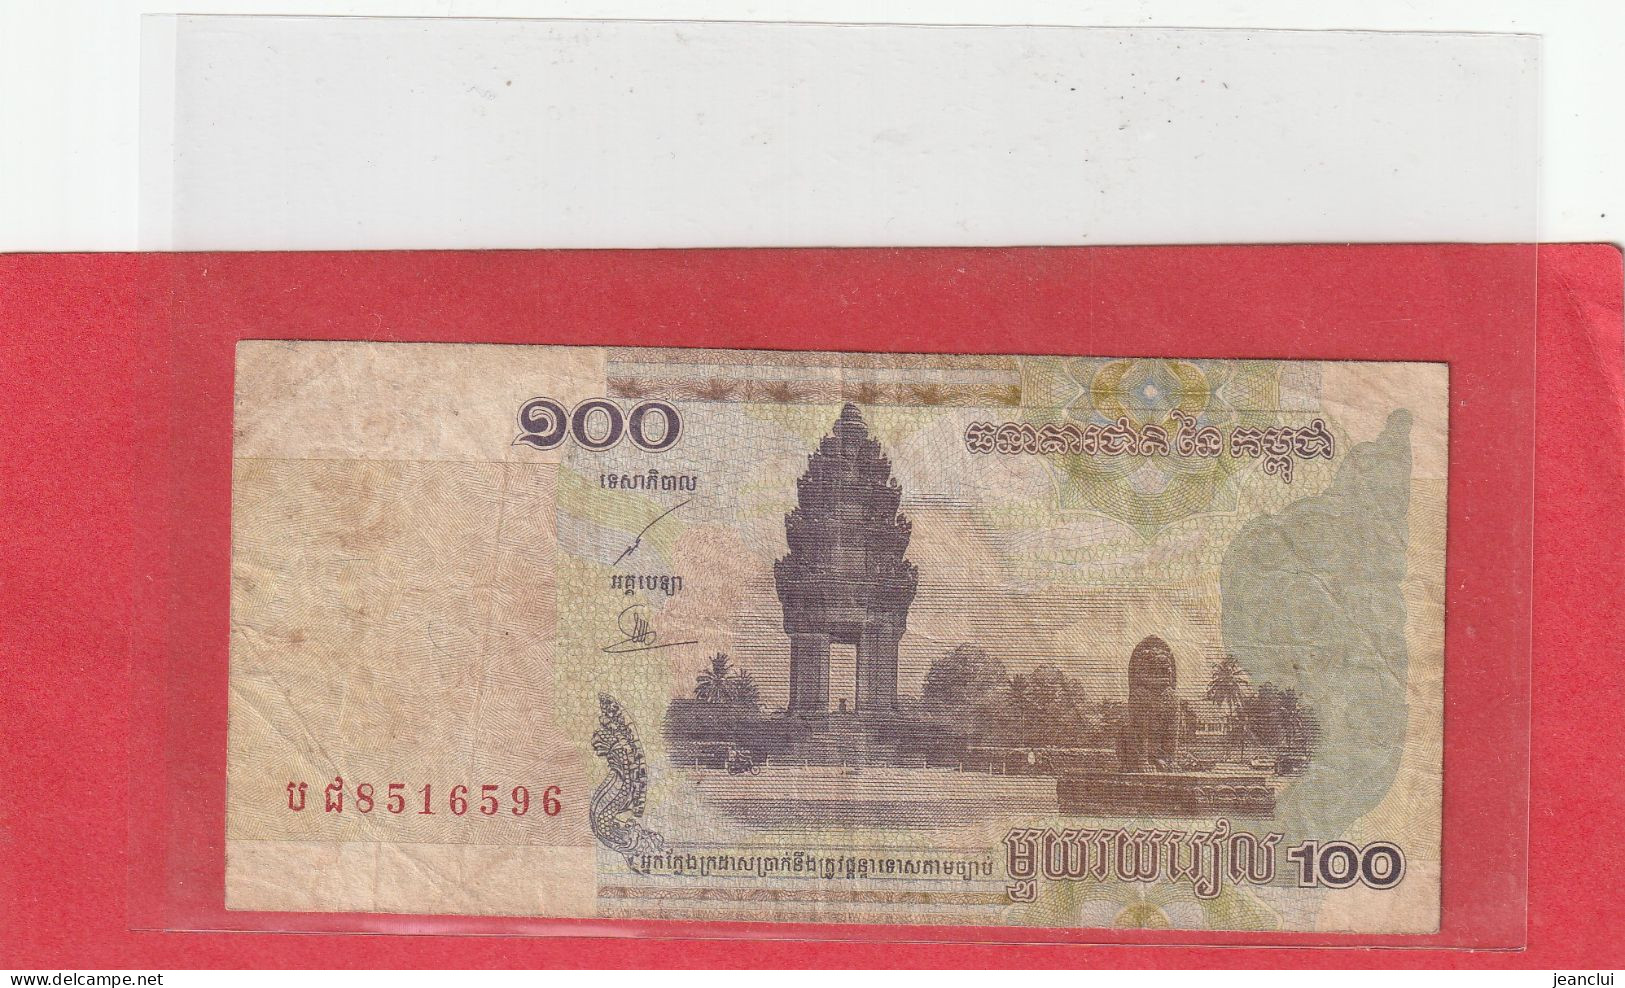 BANQUE NATIONALE DU CAMBODGE  .  100 RIELS  . 2001  . N°  8516596  .  BILLET USITE  .  2 SCANNES - Kambodscha